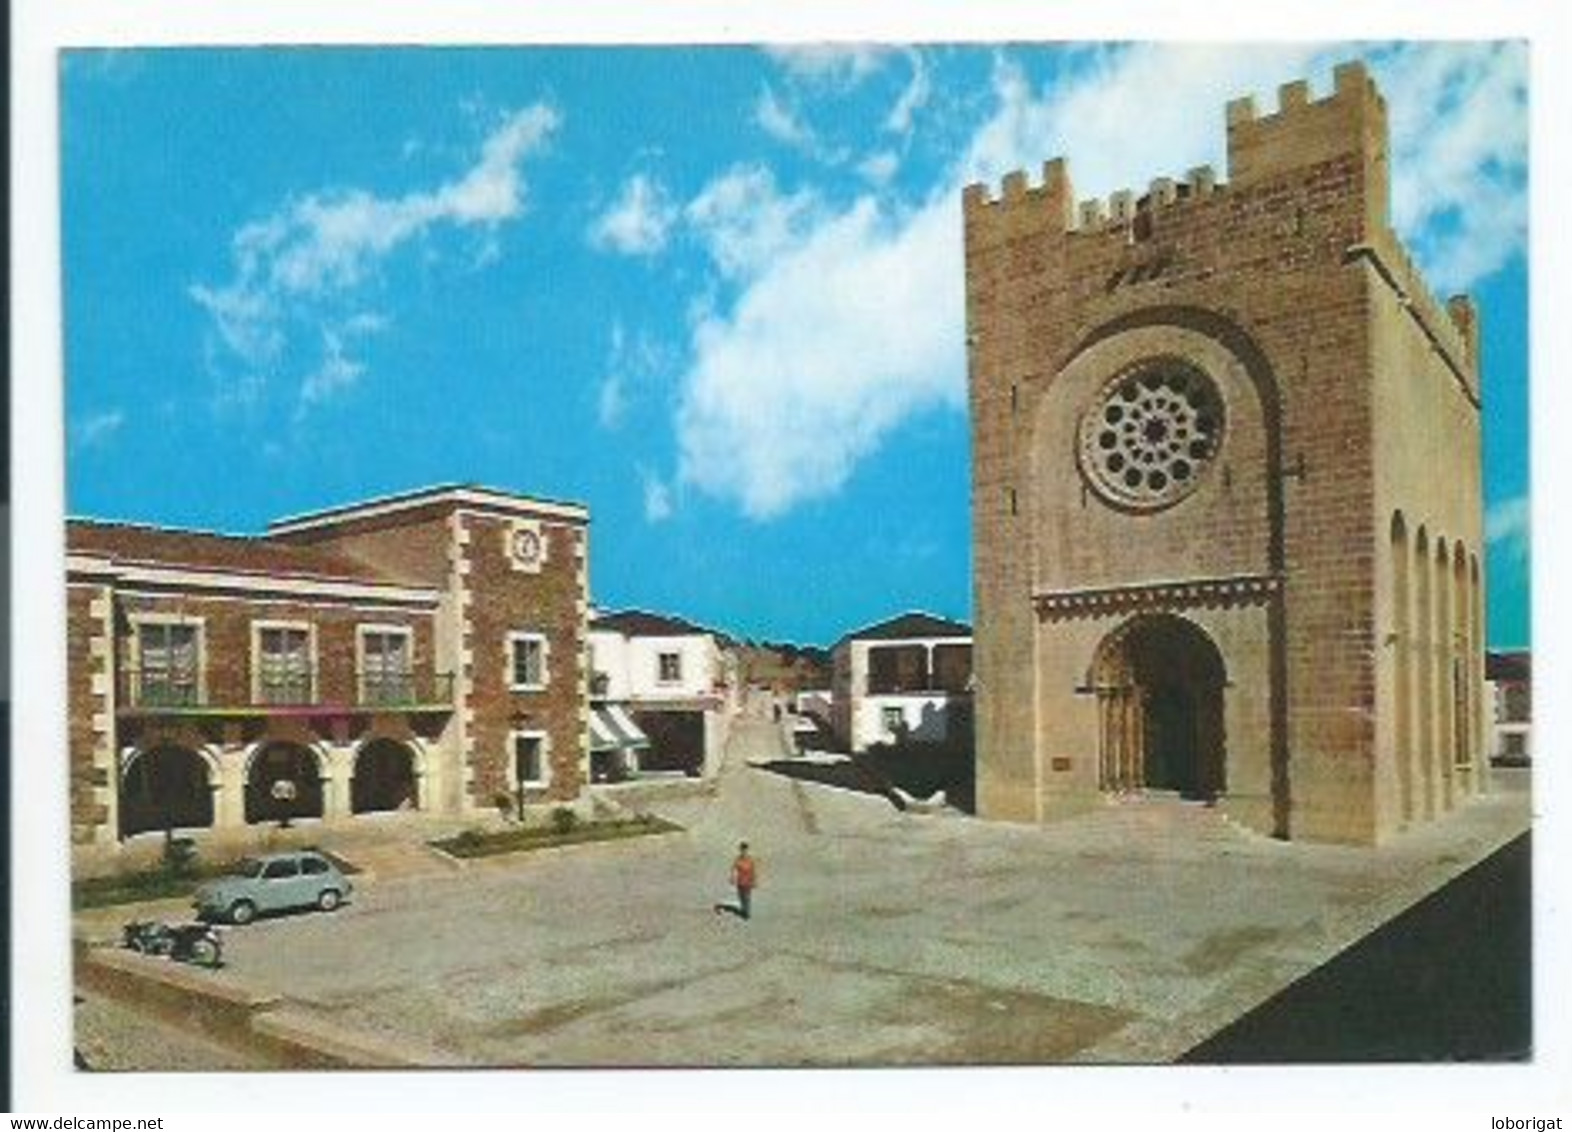 IGLESIA ROMANICA SIGLO XII / ROMAN CHURCH XII CENTURY.- NUEVO PORTOMARIN - LUGO.- ( ESPAÑA). - Lugo